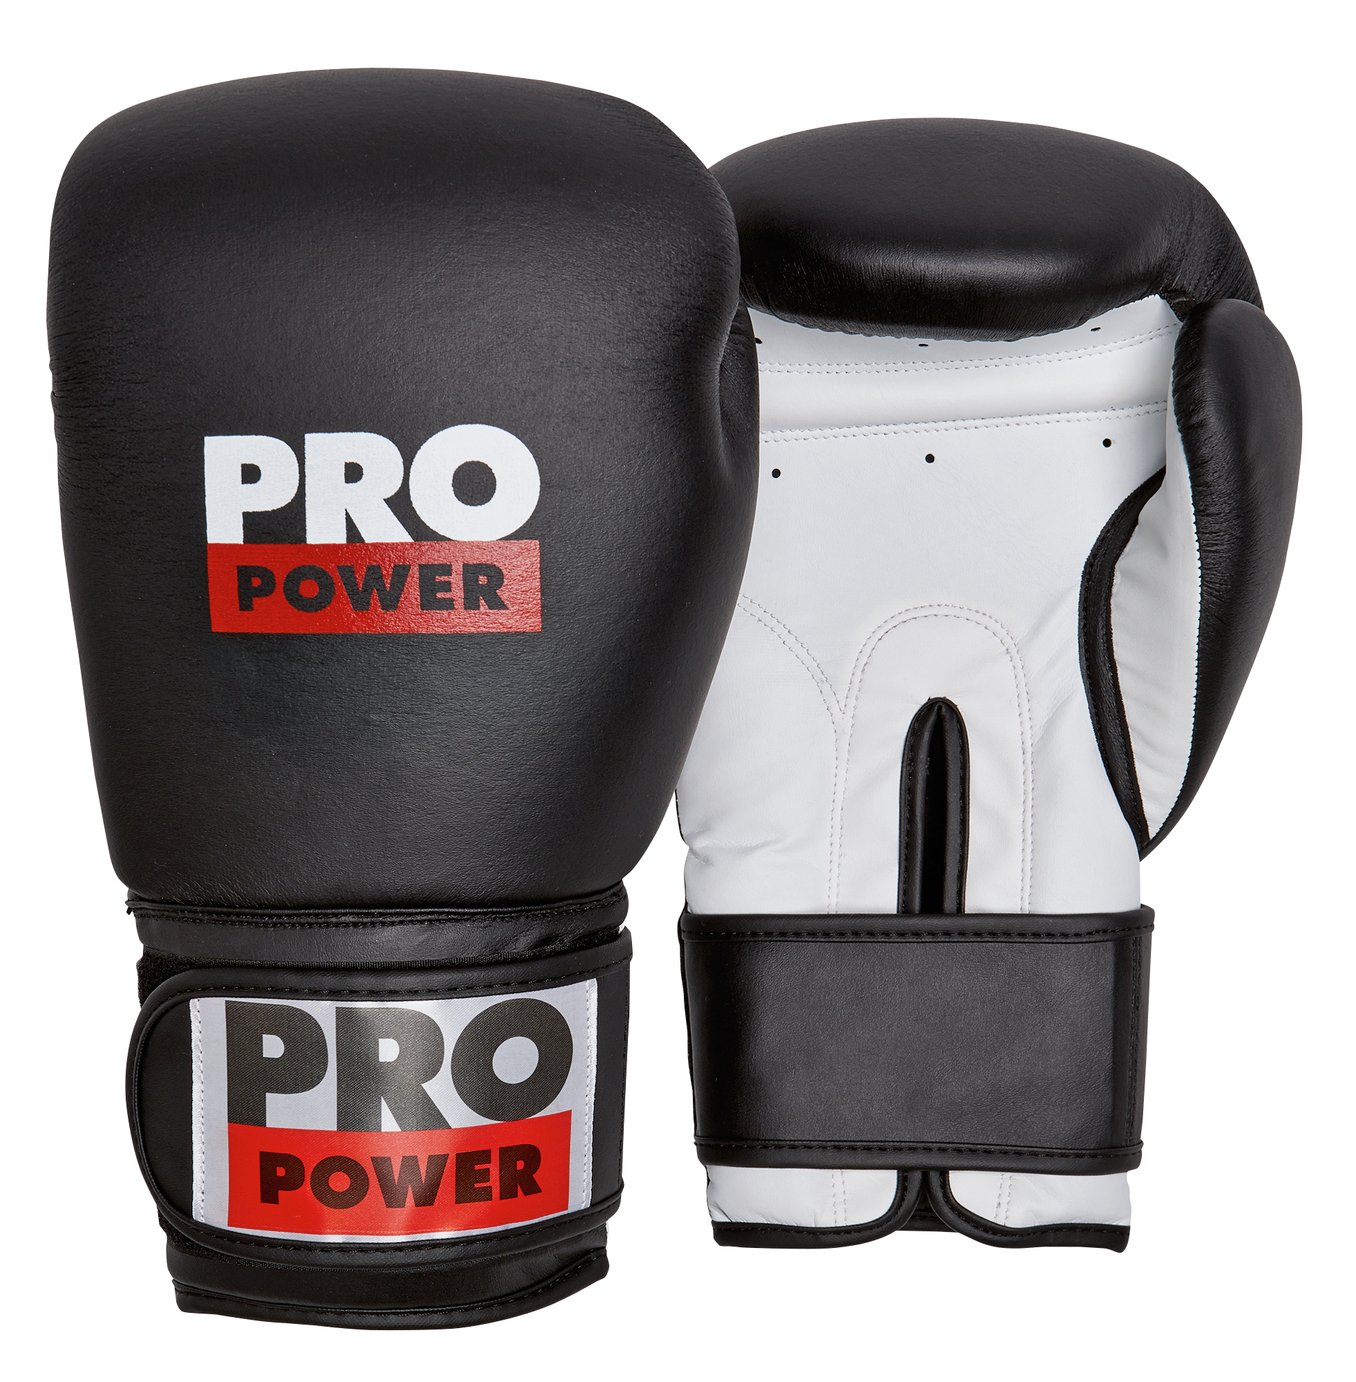 Pro Fitness 14oz Boxing Gloves